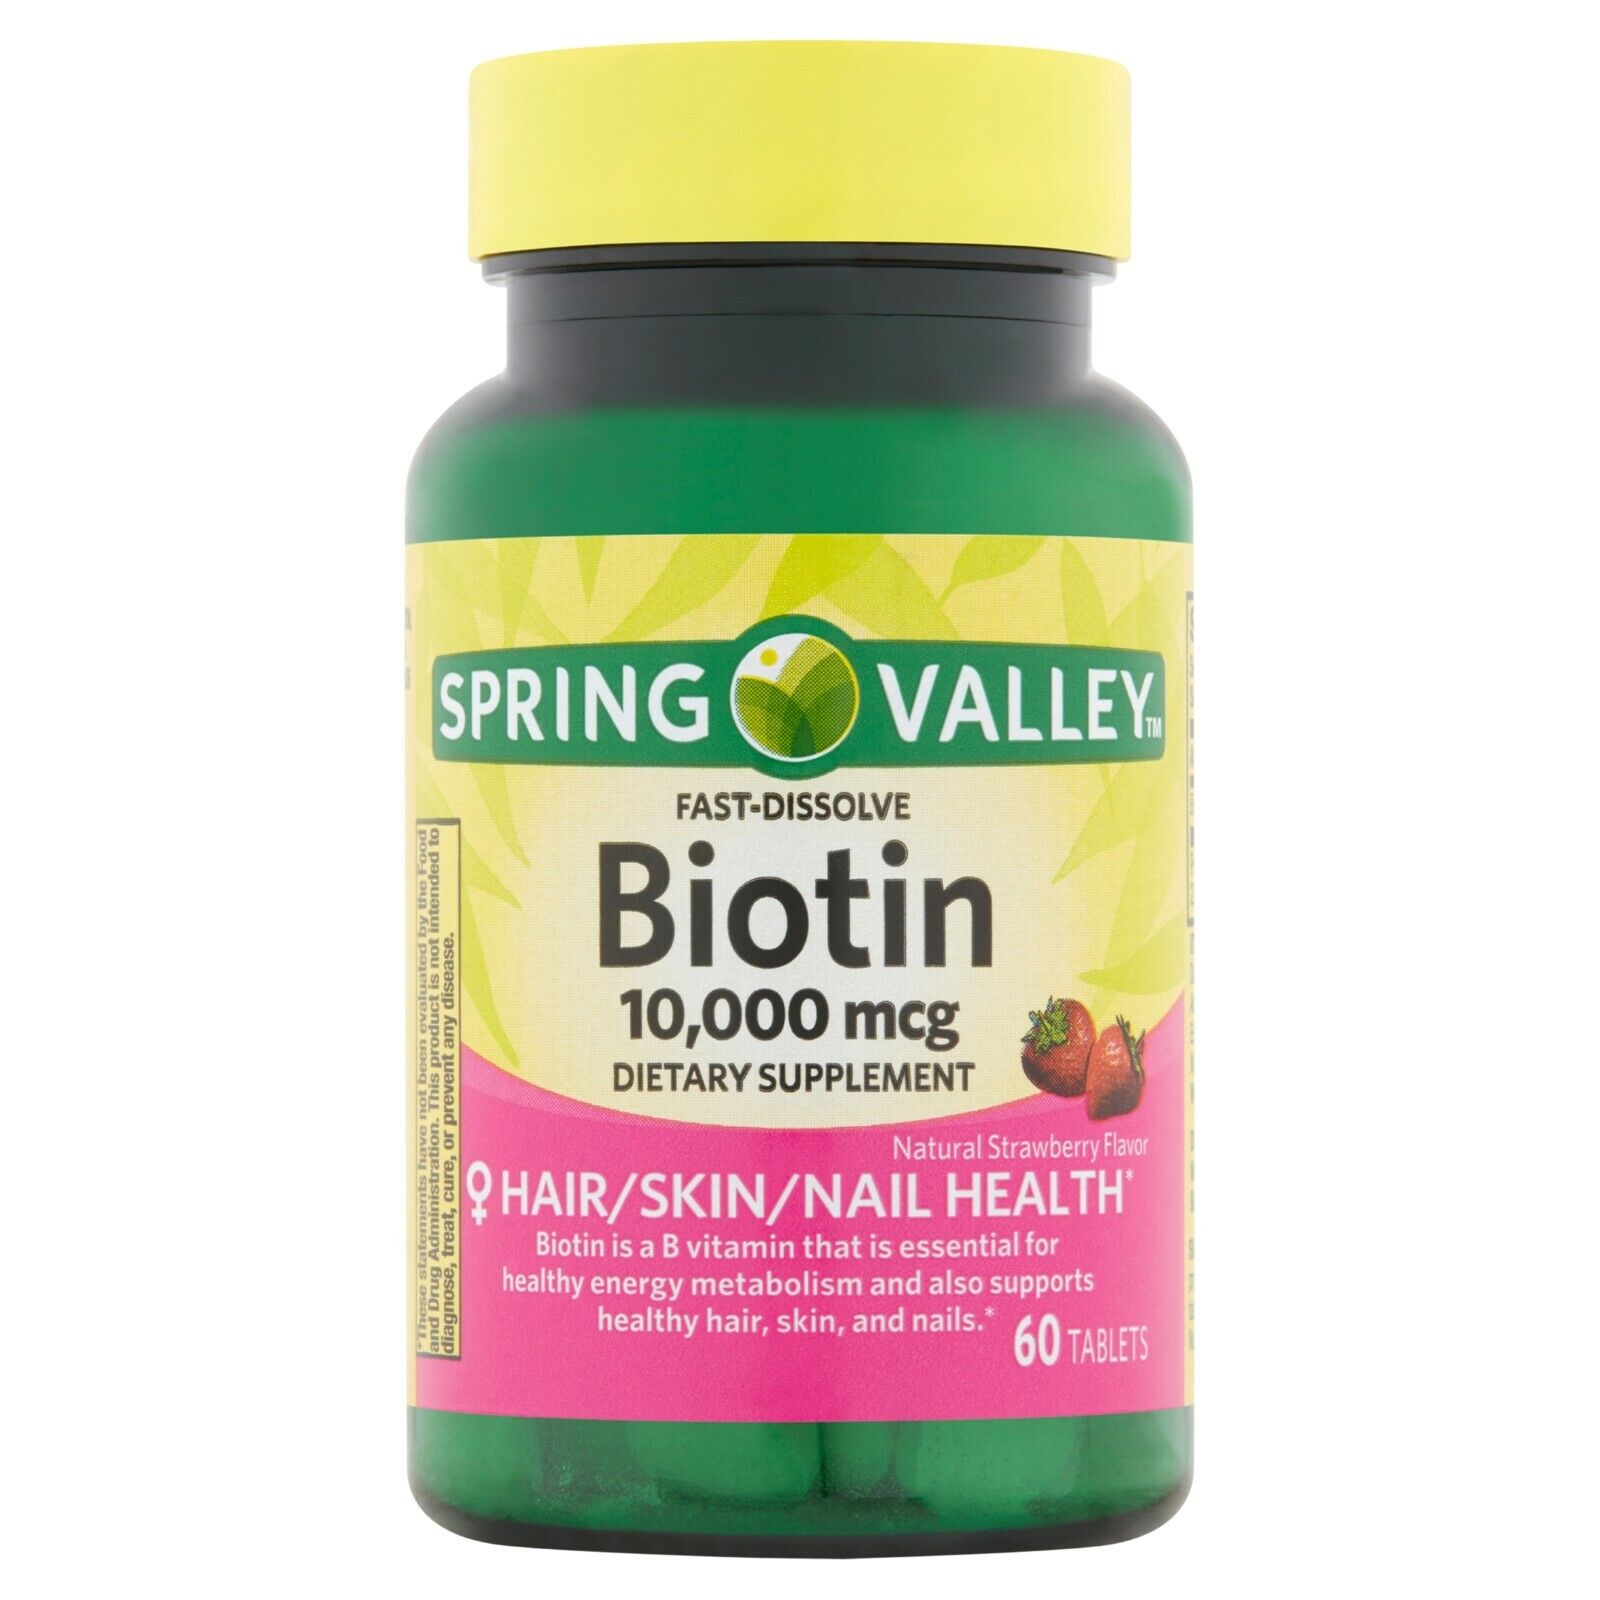 Spring Valley Fast-Dissolve Biotin Tablets, 10,000 mcg, 60